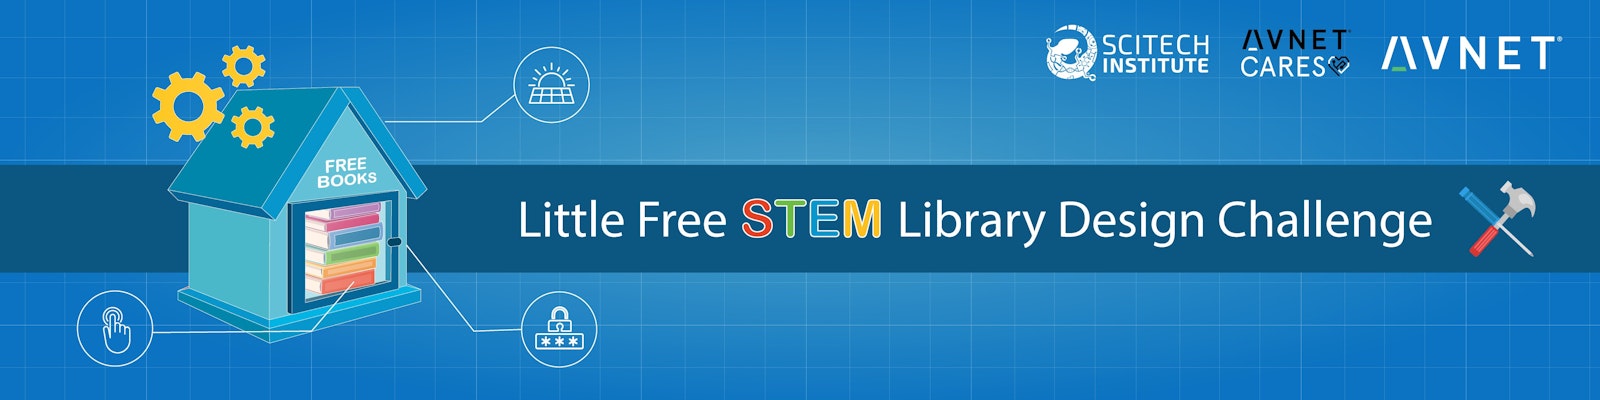 Little Free STEM Library